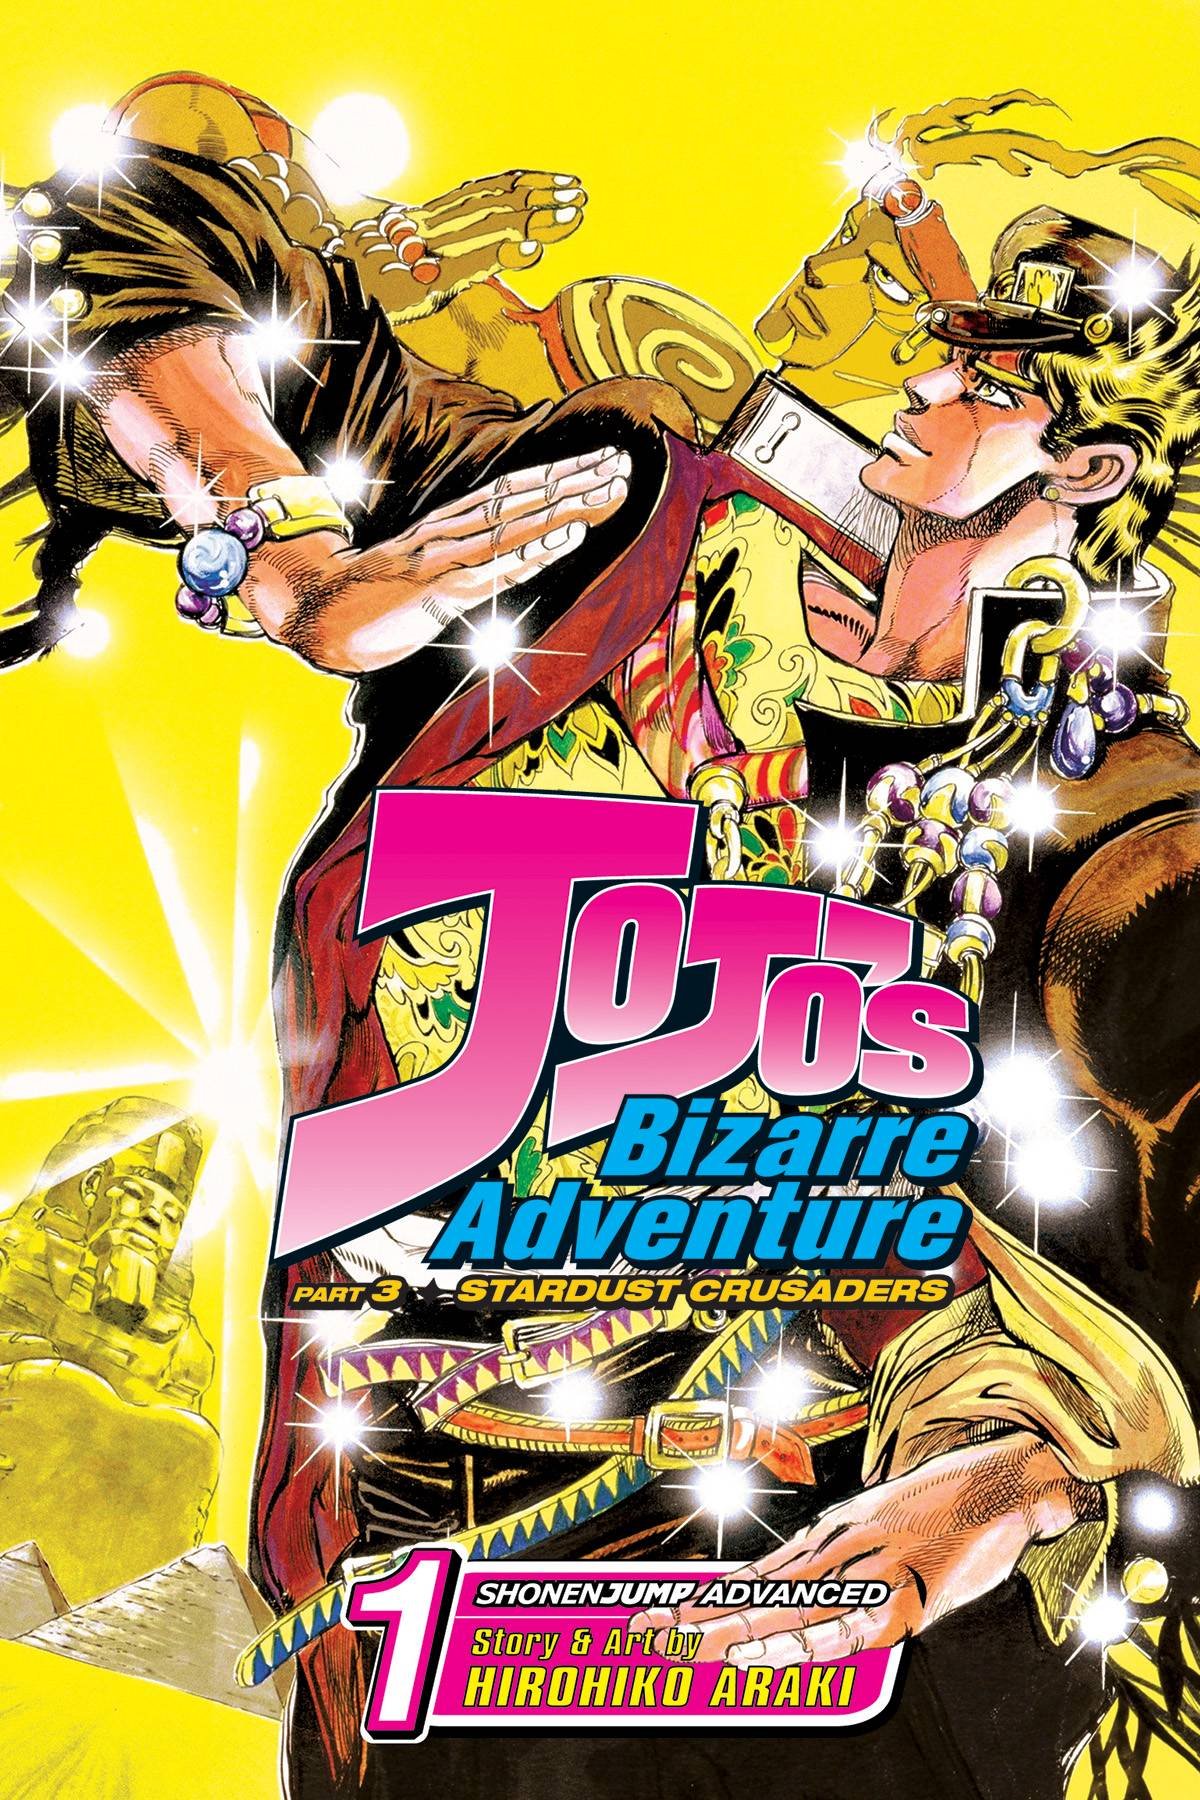 jo-jos-bizarre-adventure-part-3-stardust-crusaders-vol-1